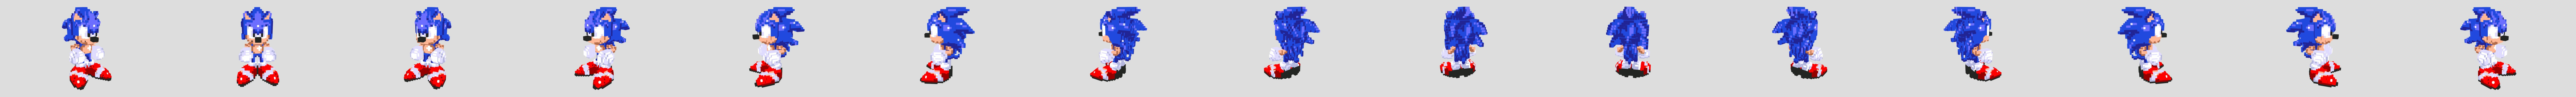 Pixilart - Sonic 3 Sprite by TheGameFan